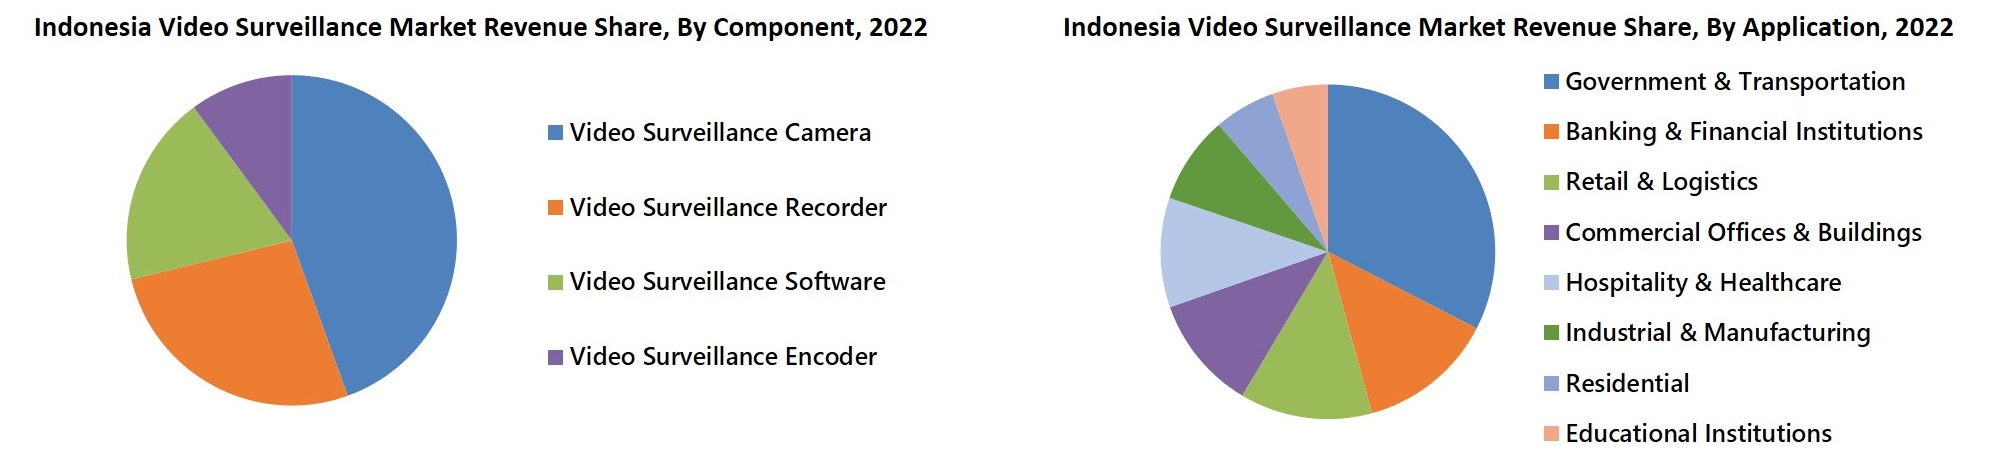 Indonesia Video Surveillance Market Revenue Share